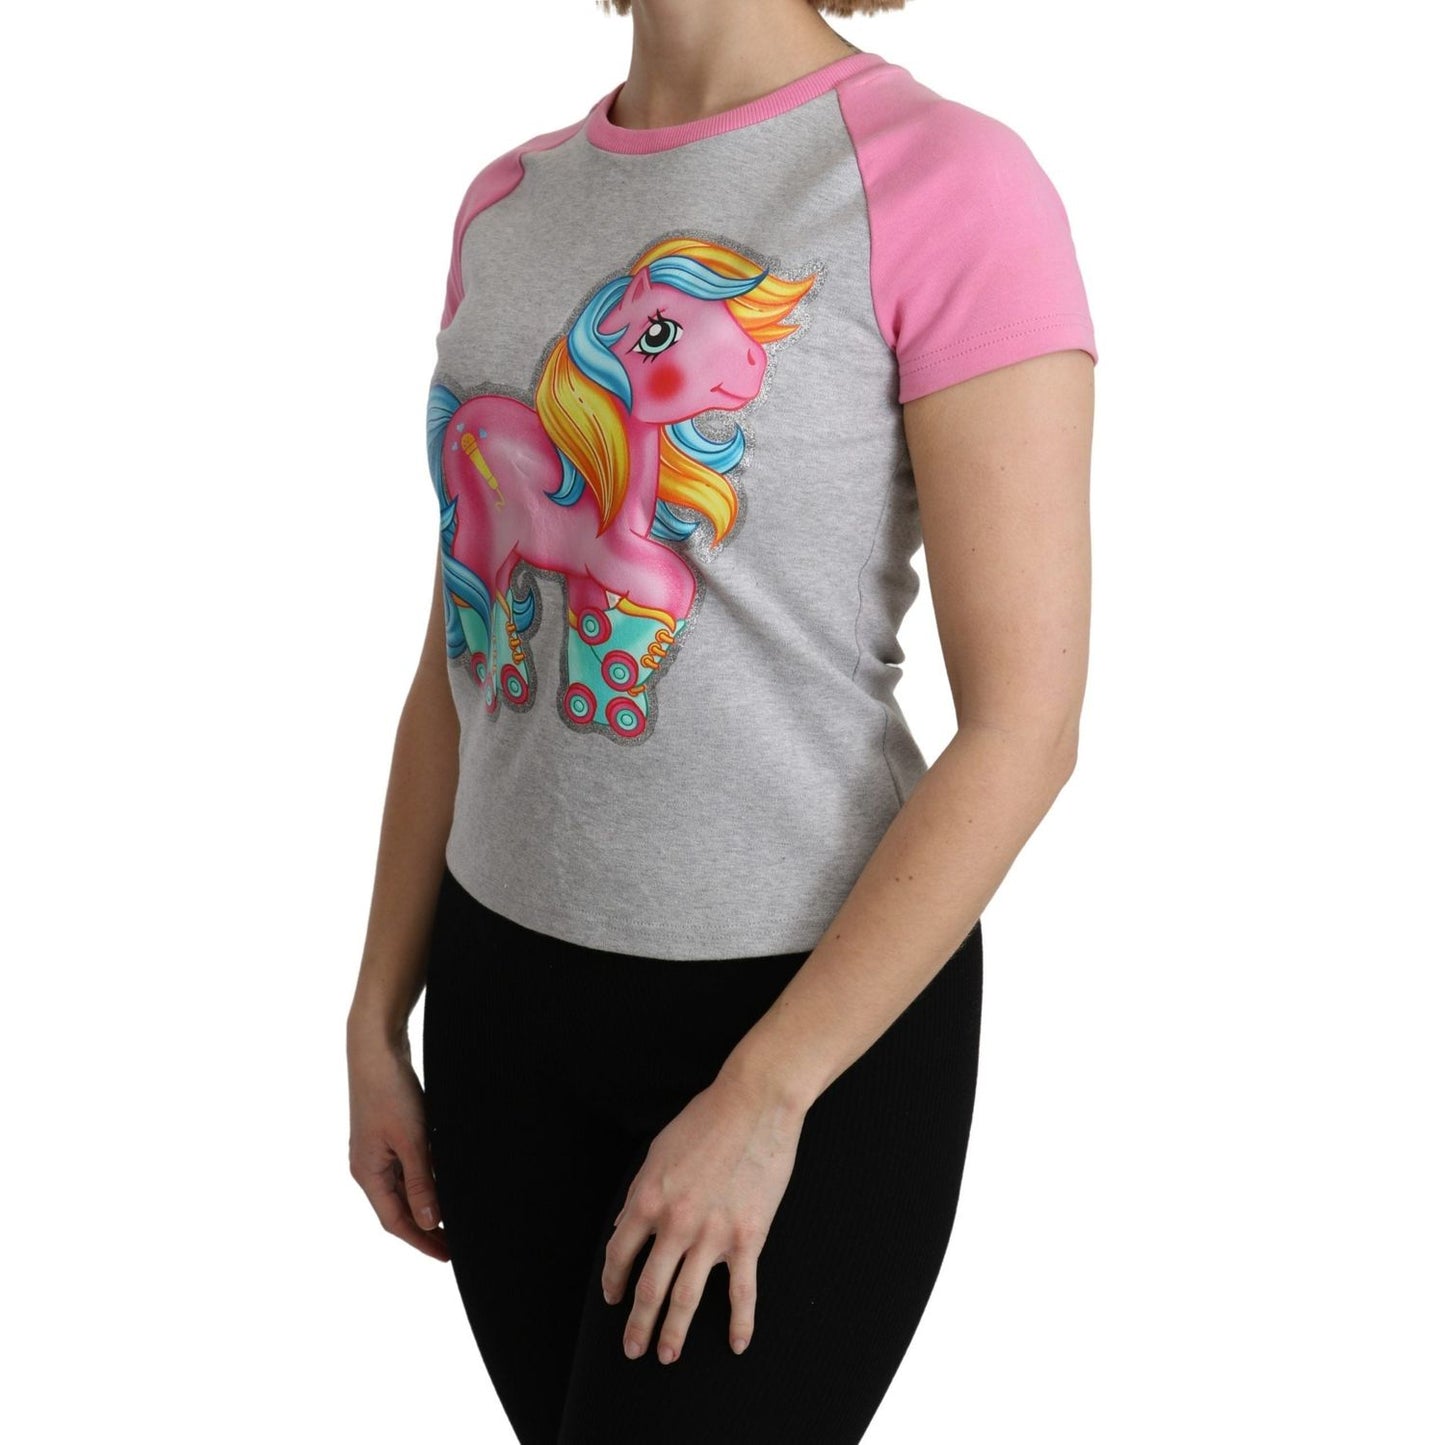 Moschino Chic Gray Crew Neck Cotton T-shirt with Pink Accents gray-and-pink-cotton-t-shirt-my-little-pony-top IMG_1482-scaled-489db52b-ee2.jpg